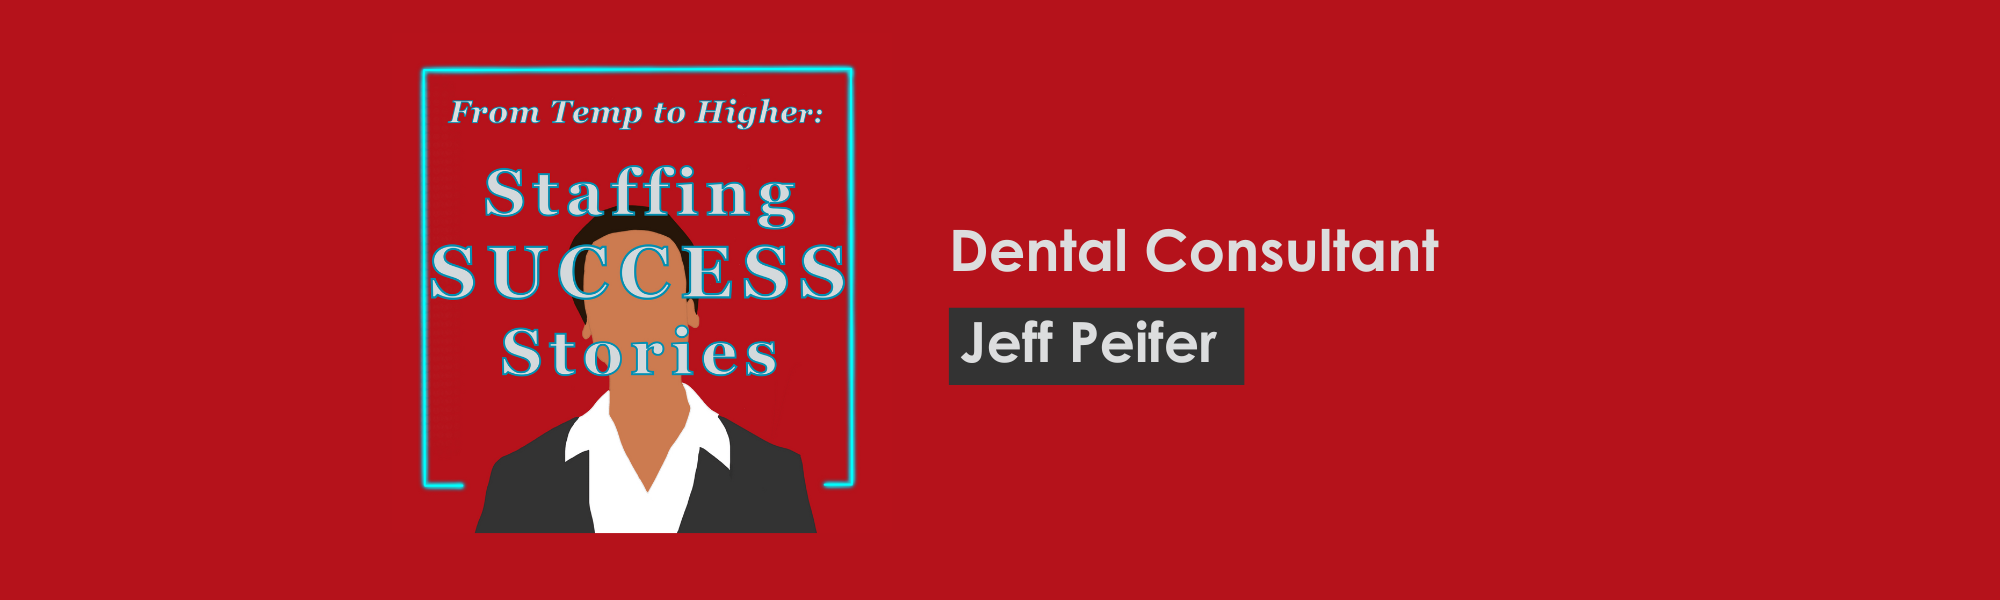 Dental Consultant Hero Image